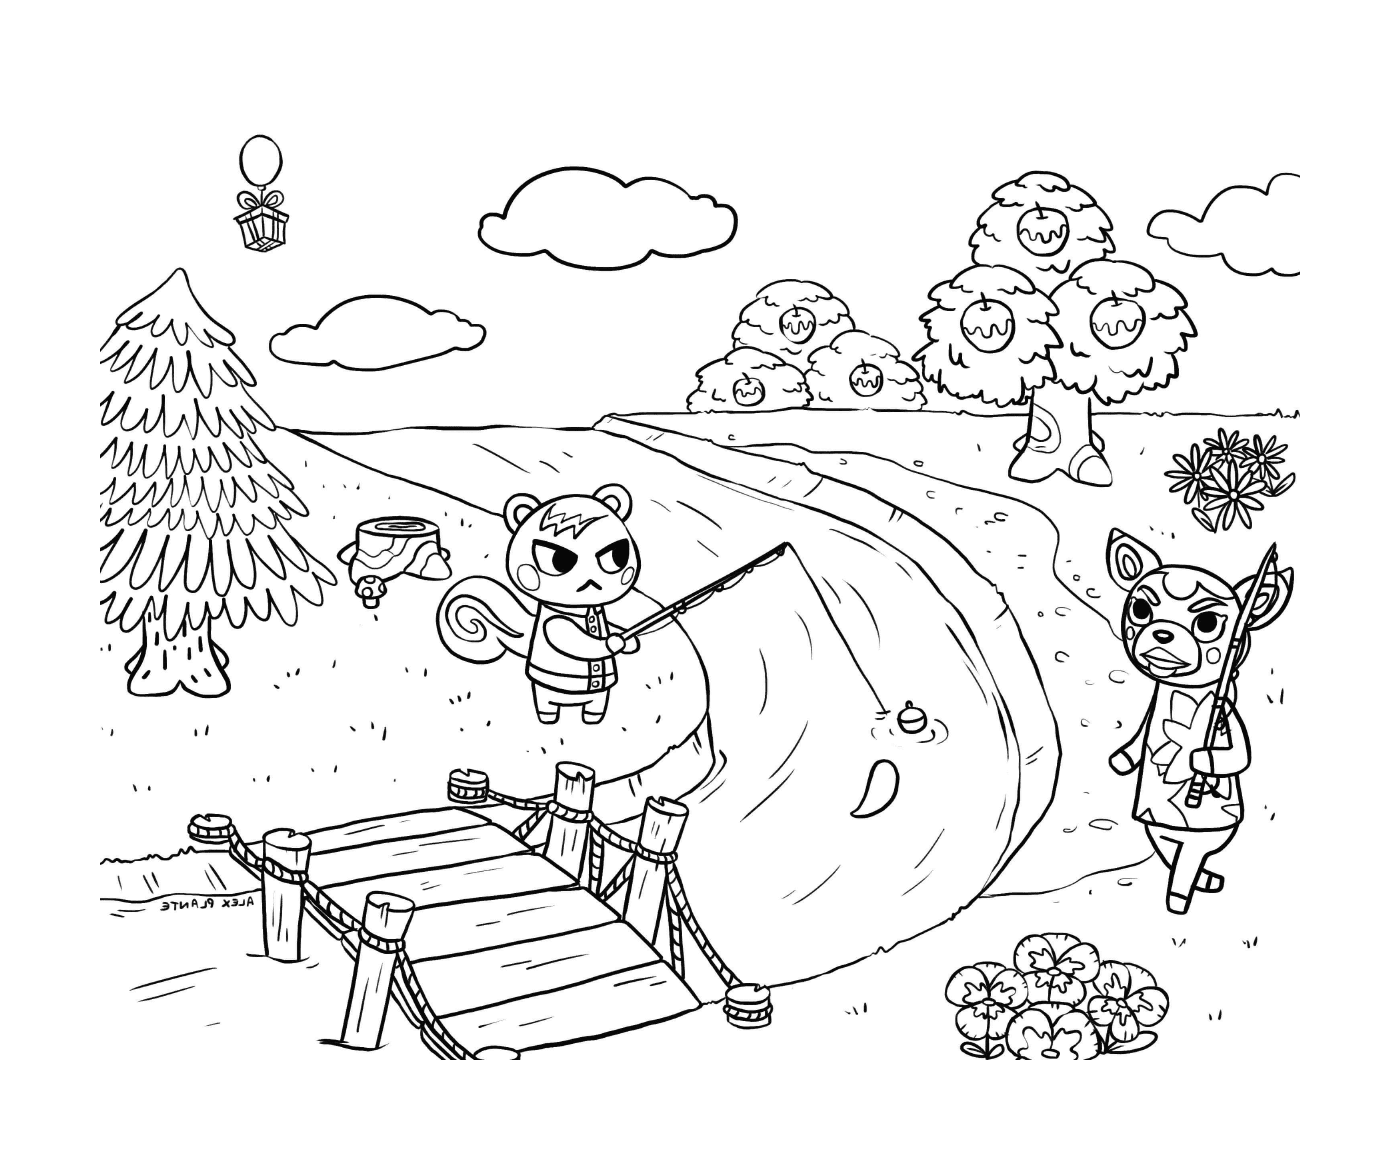  Villagers of Animal Crossing pesca um urso 